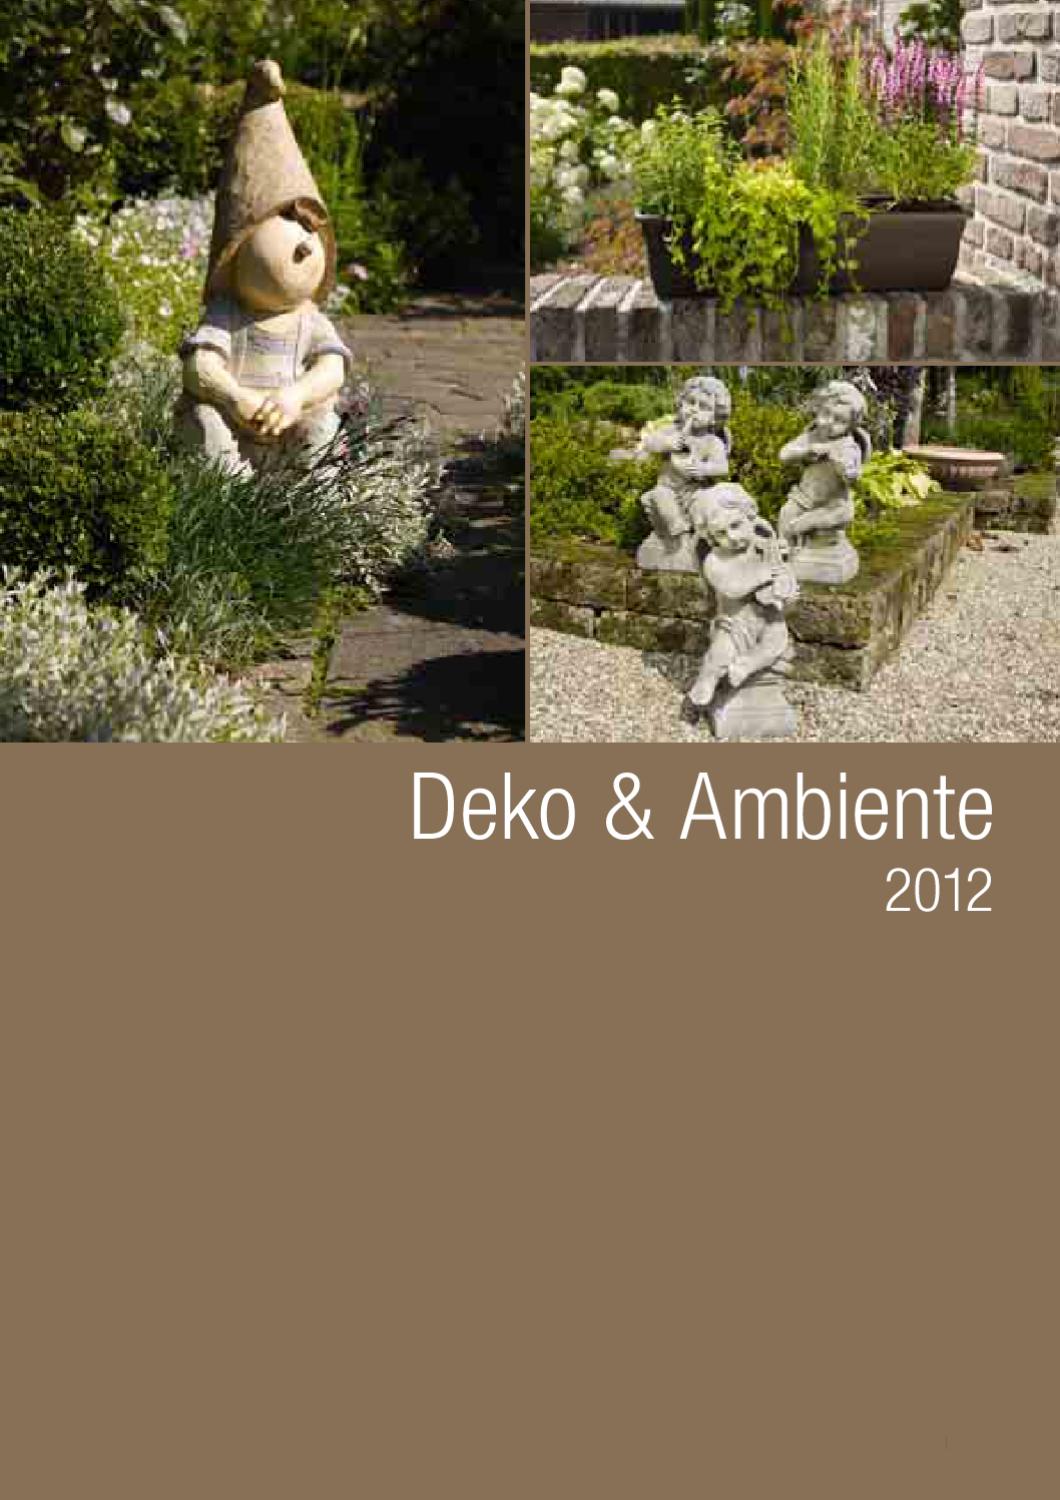 Fahrrad Deko Garten Best Of Deko & Ambiente by Mats andersson issuu